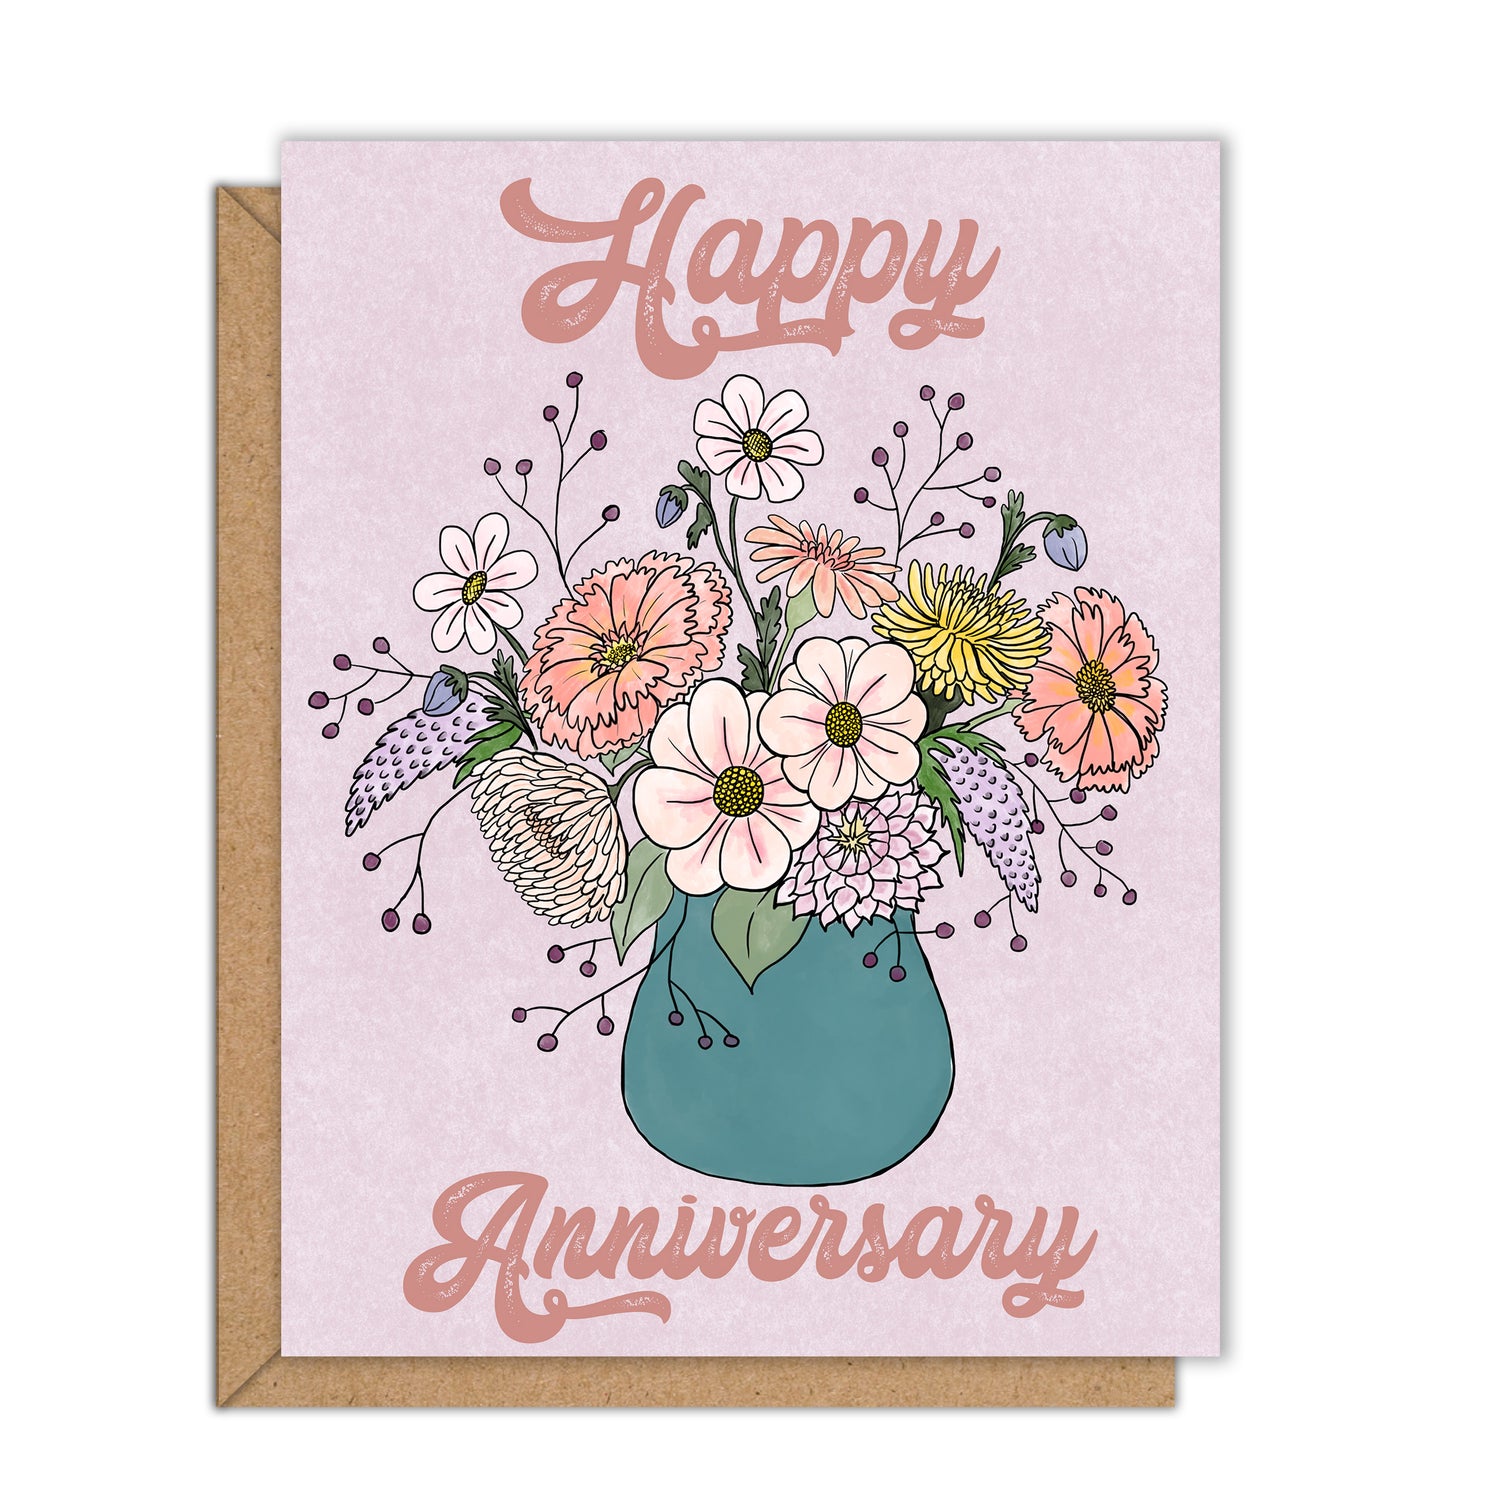 Happy Anniversary Card - Moon Room Shop and Wellness